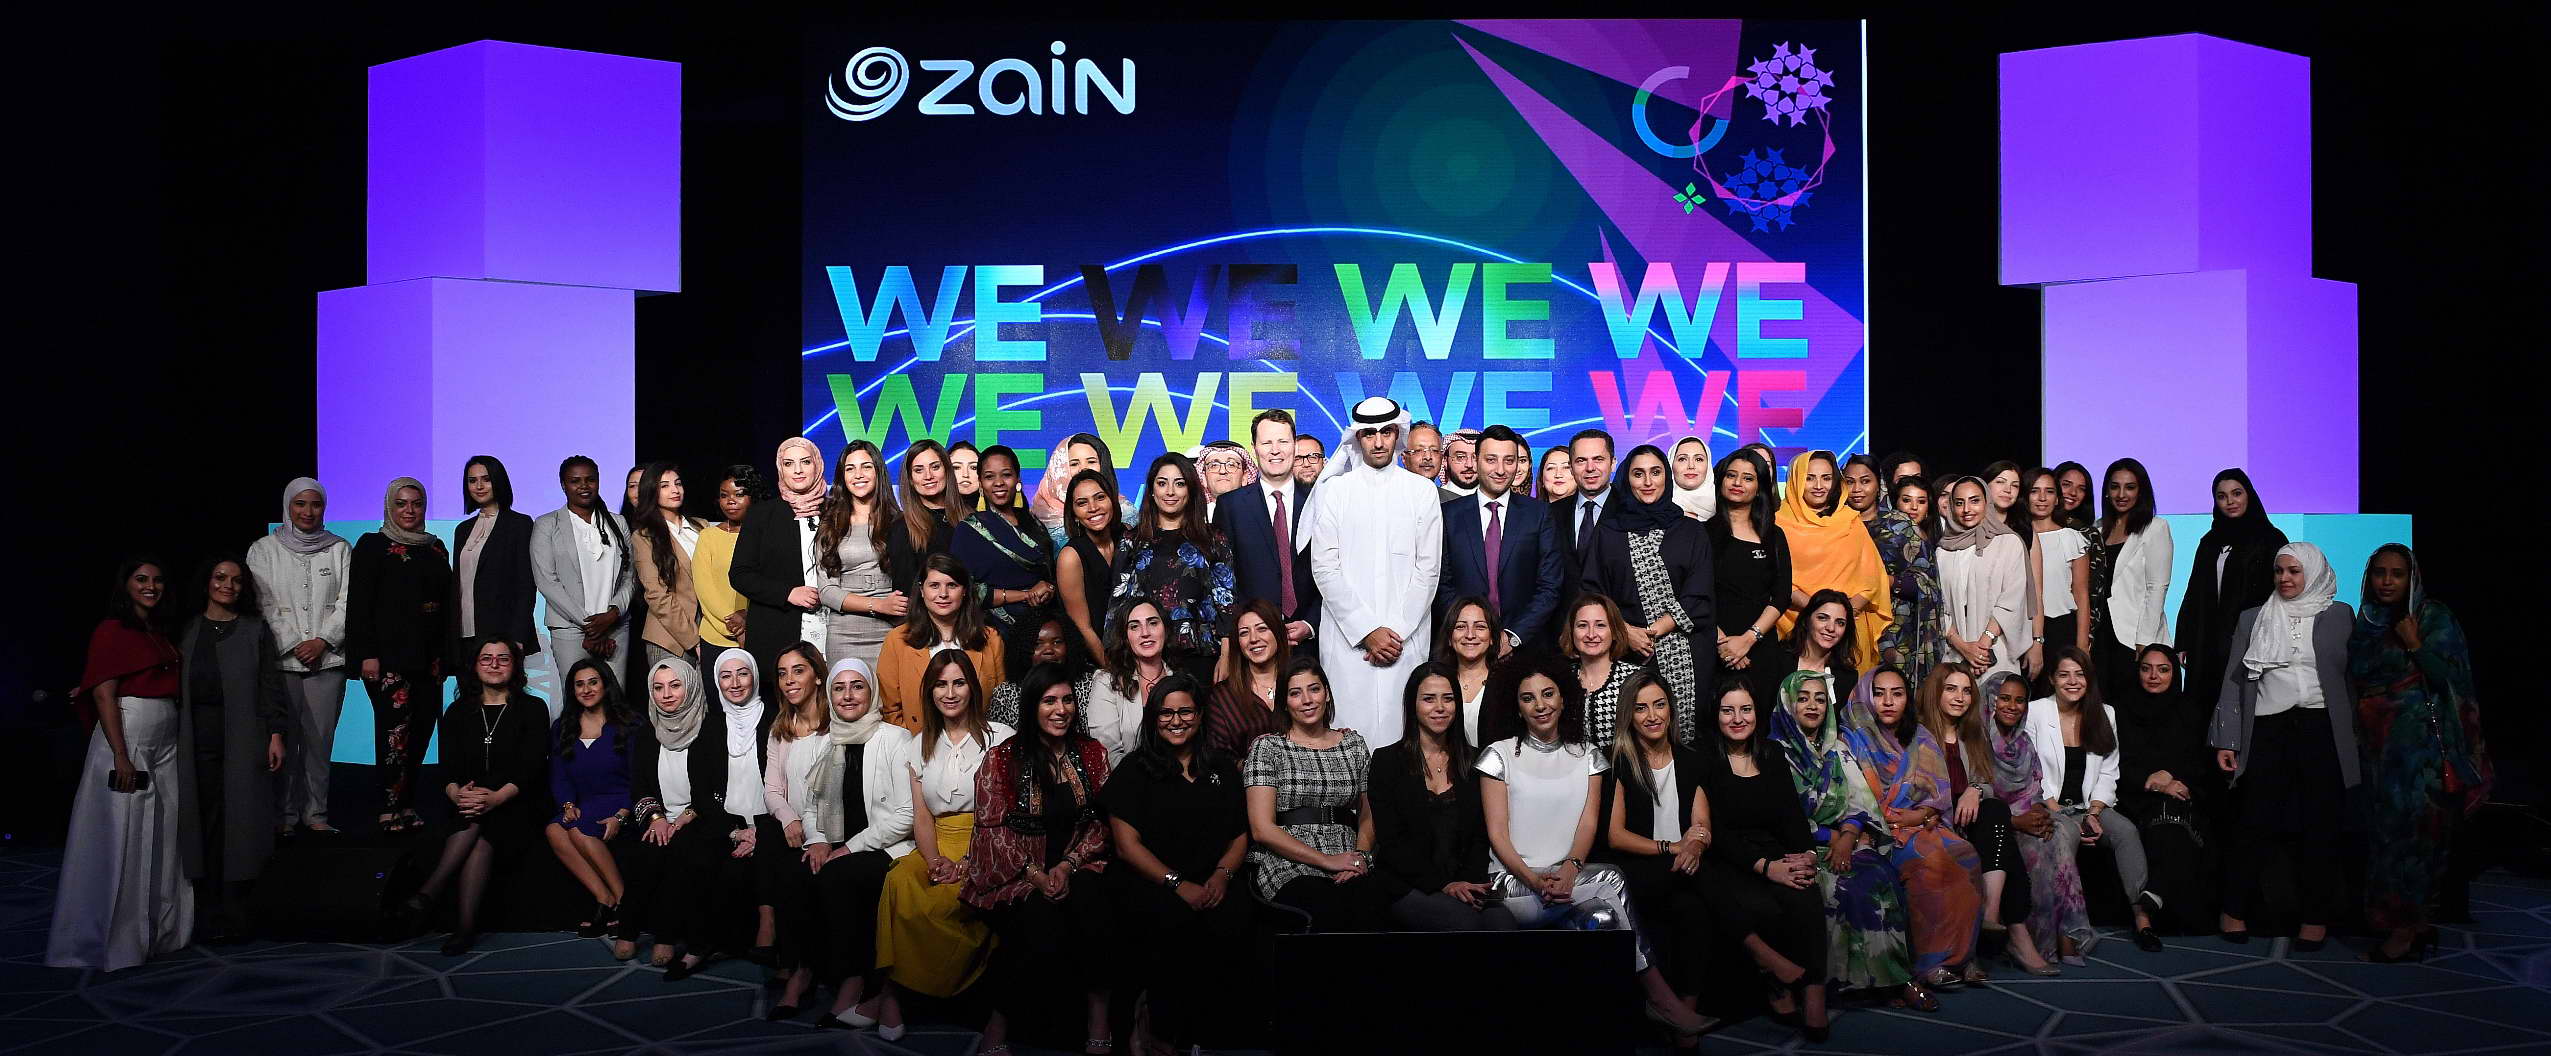 Zain Group WE Forum 2018 1.jpg